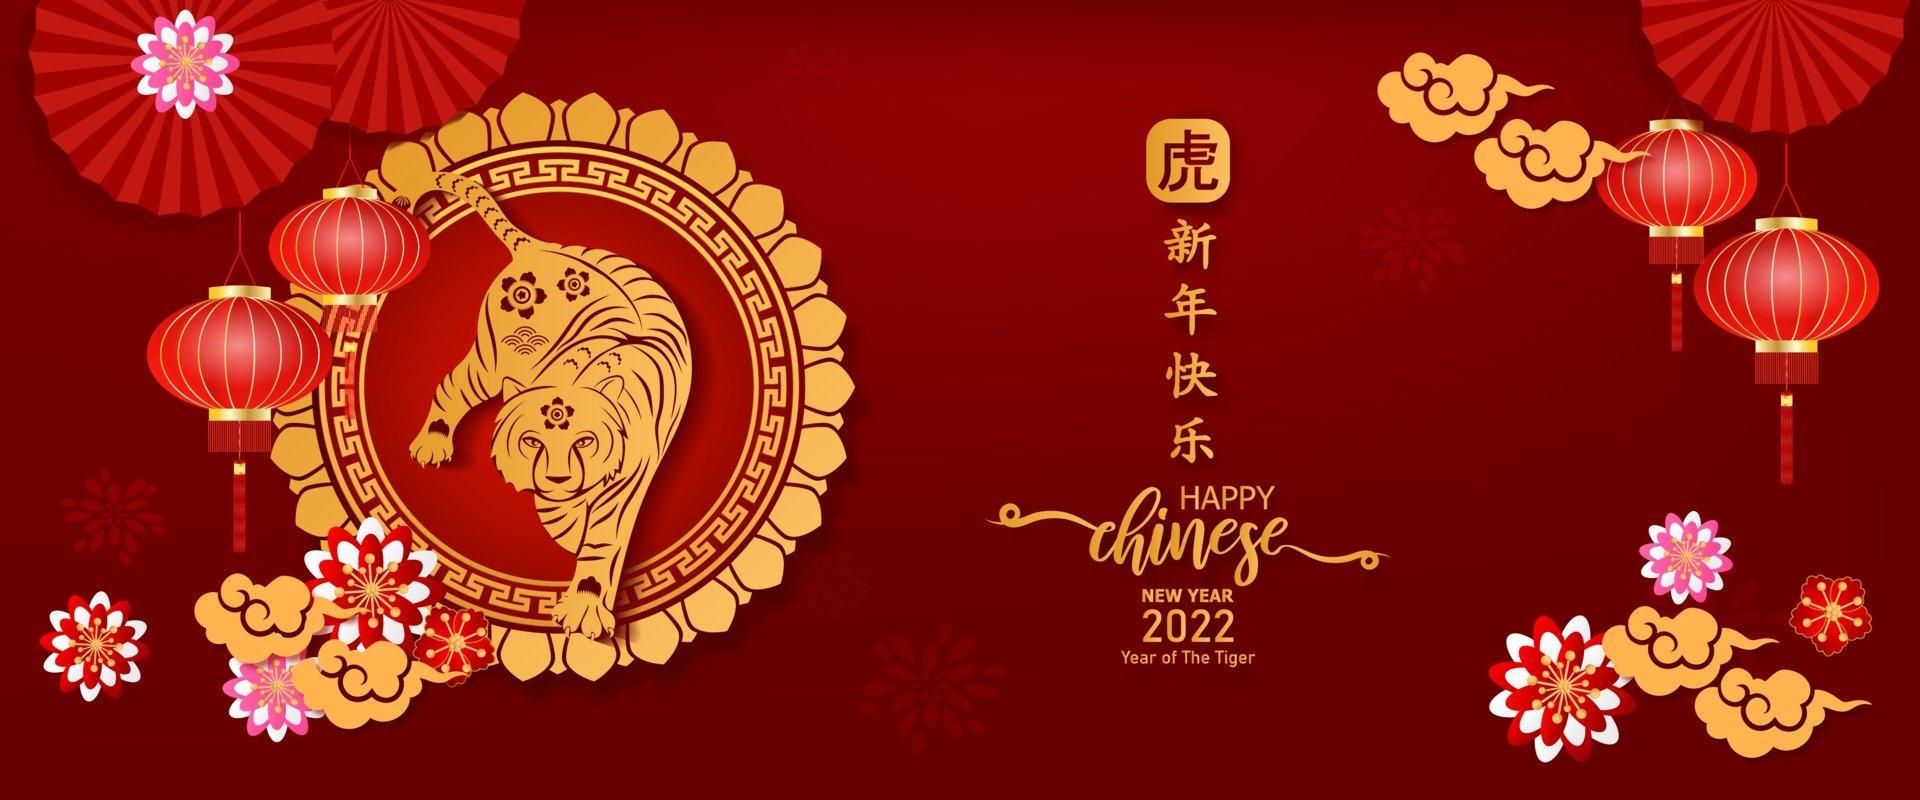 Chinese new year 2022 wallpaper